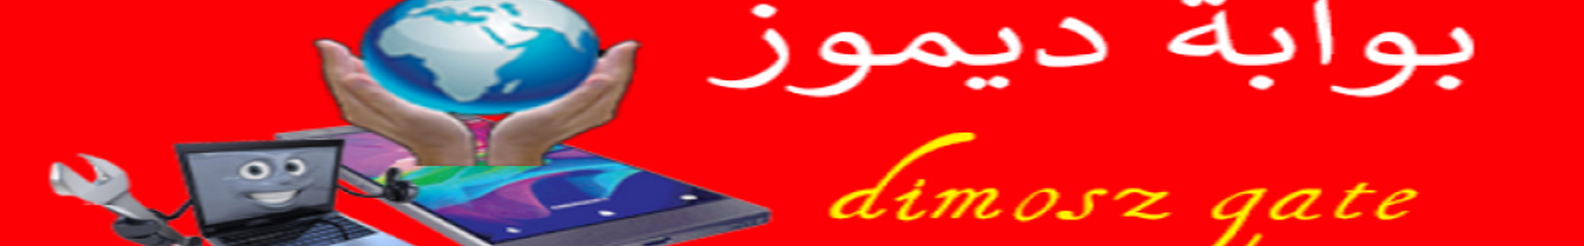 dimosz oner's profile banner